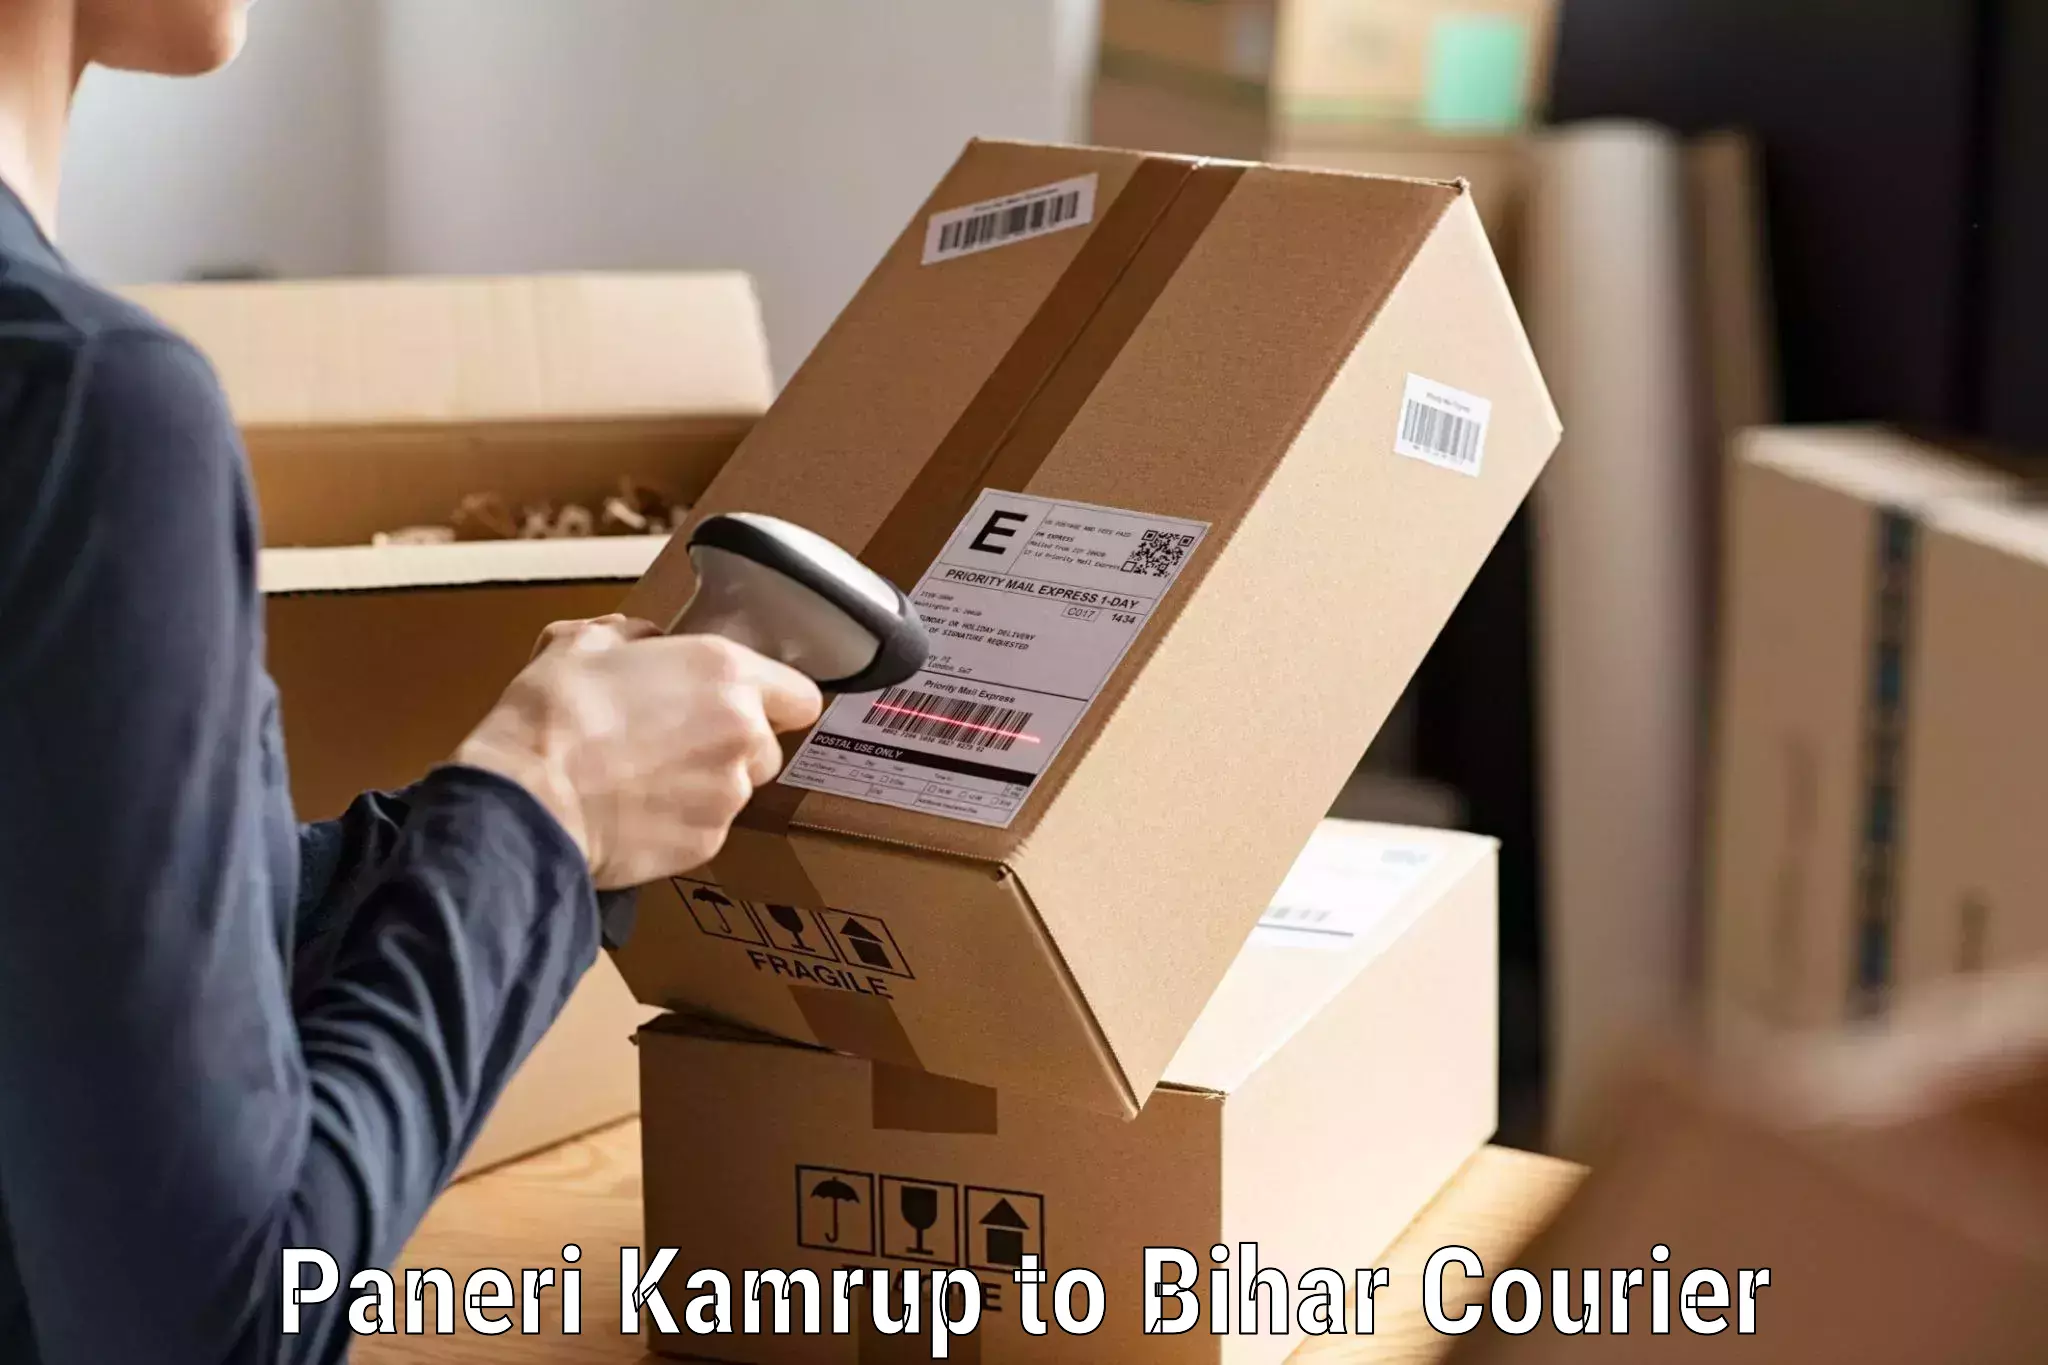 State-of-the-art courier technology Paneri Kamrup to Hazrat Jandaha